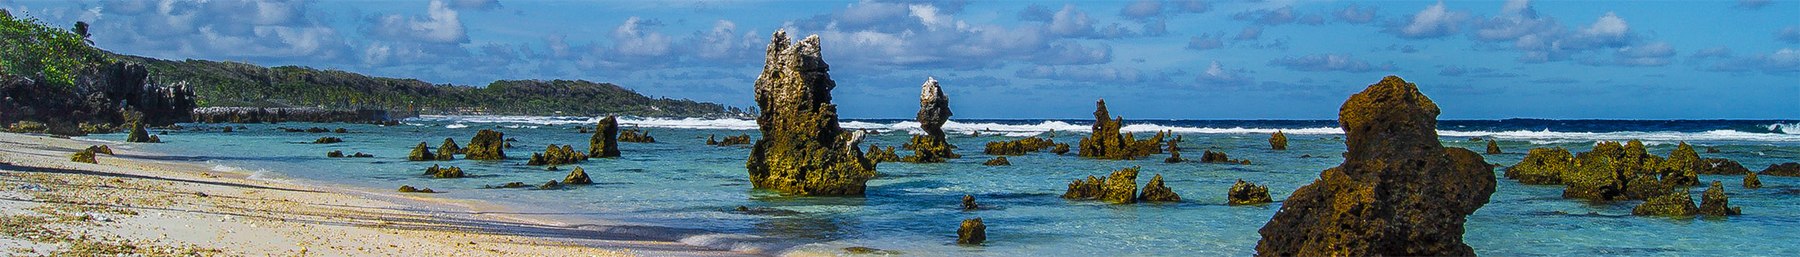 Rocks by the Beach Nauru banner.jpg